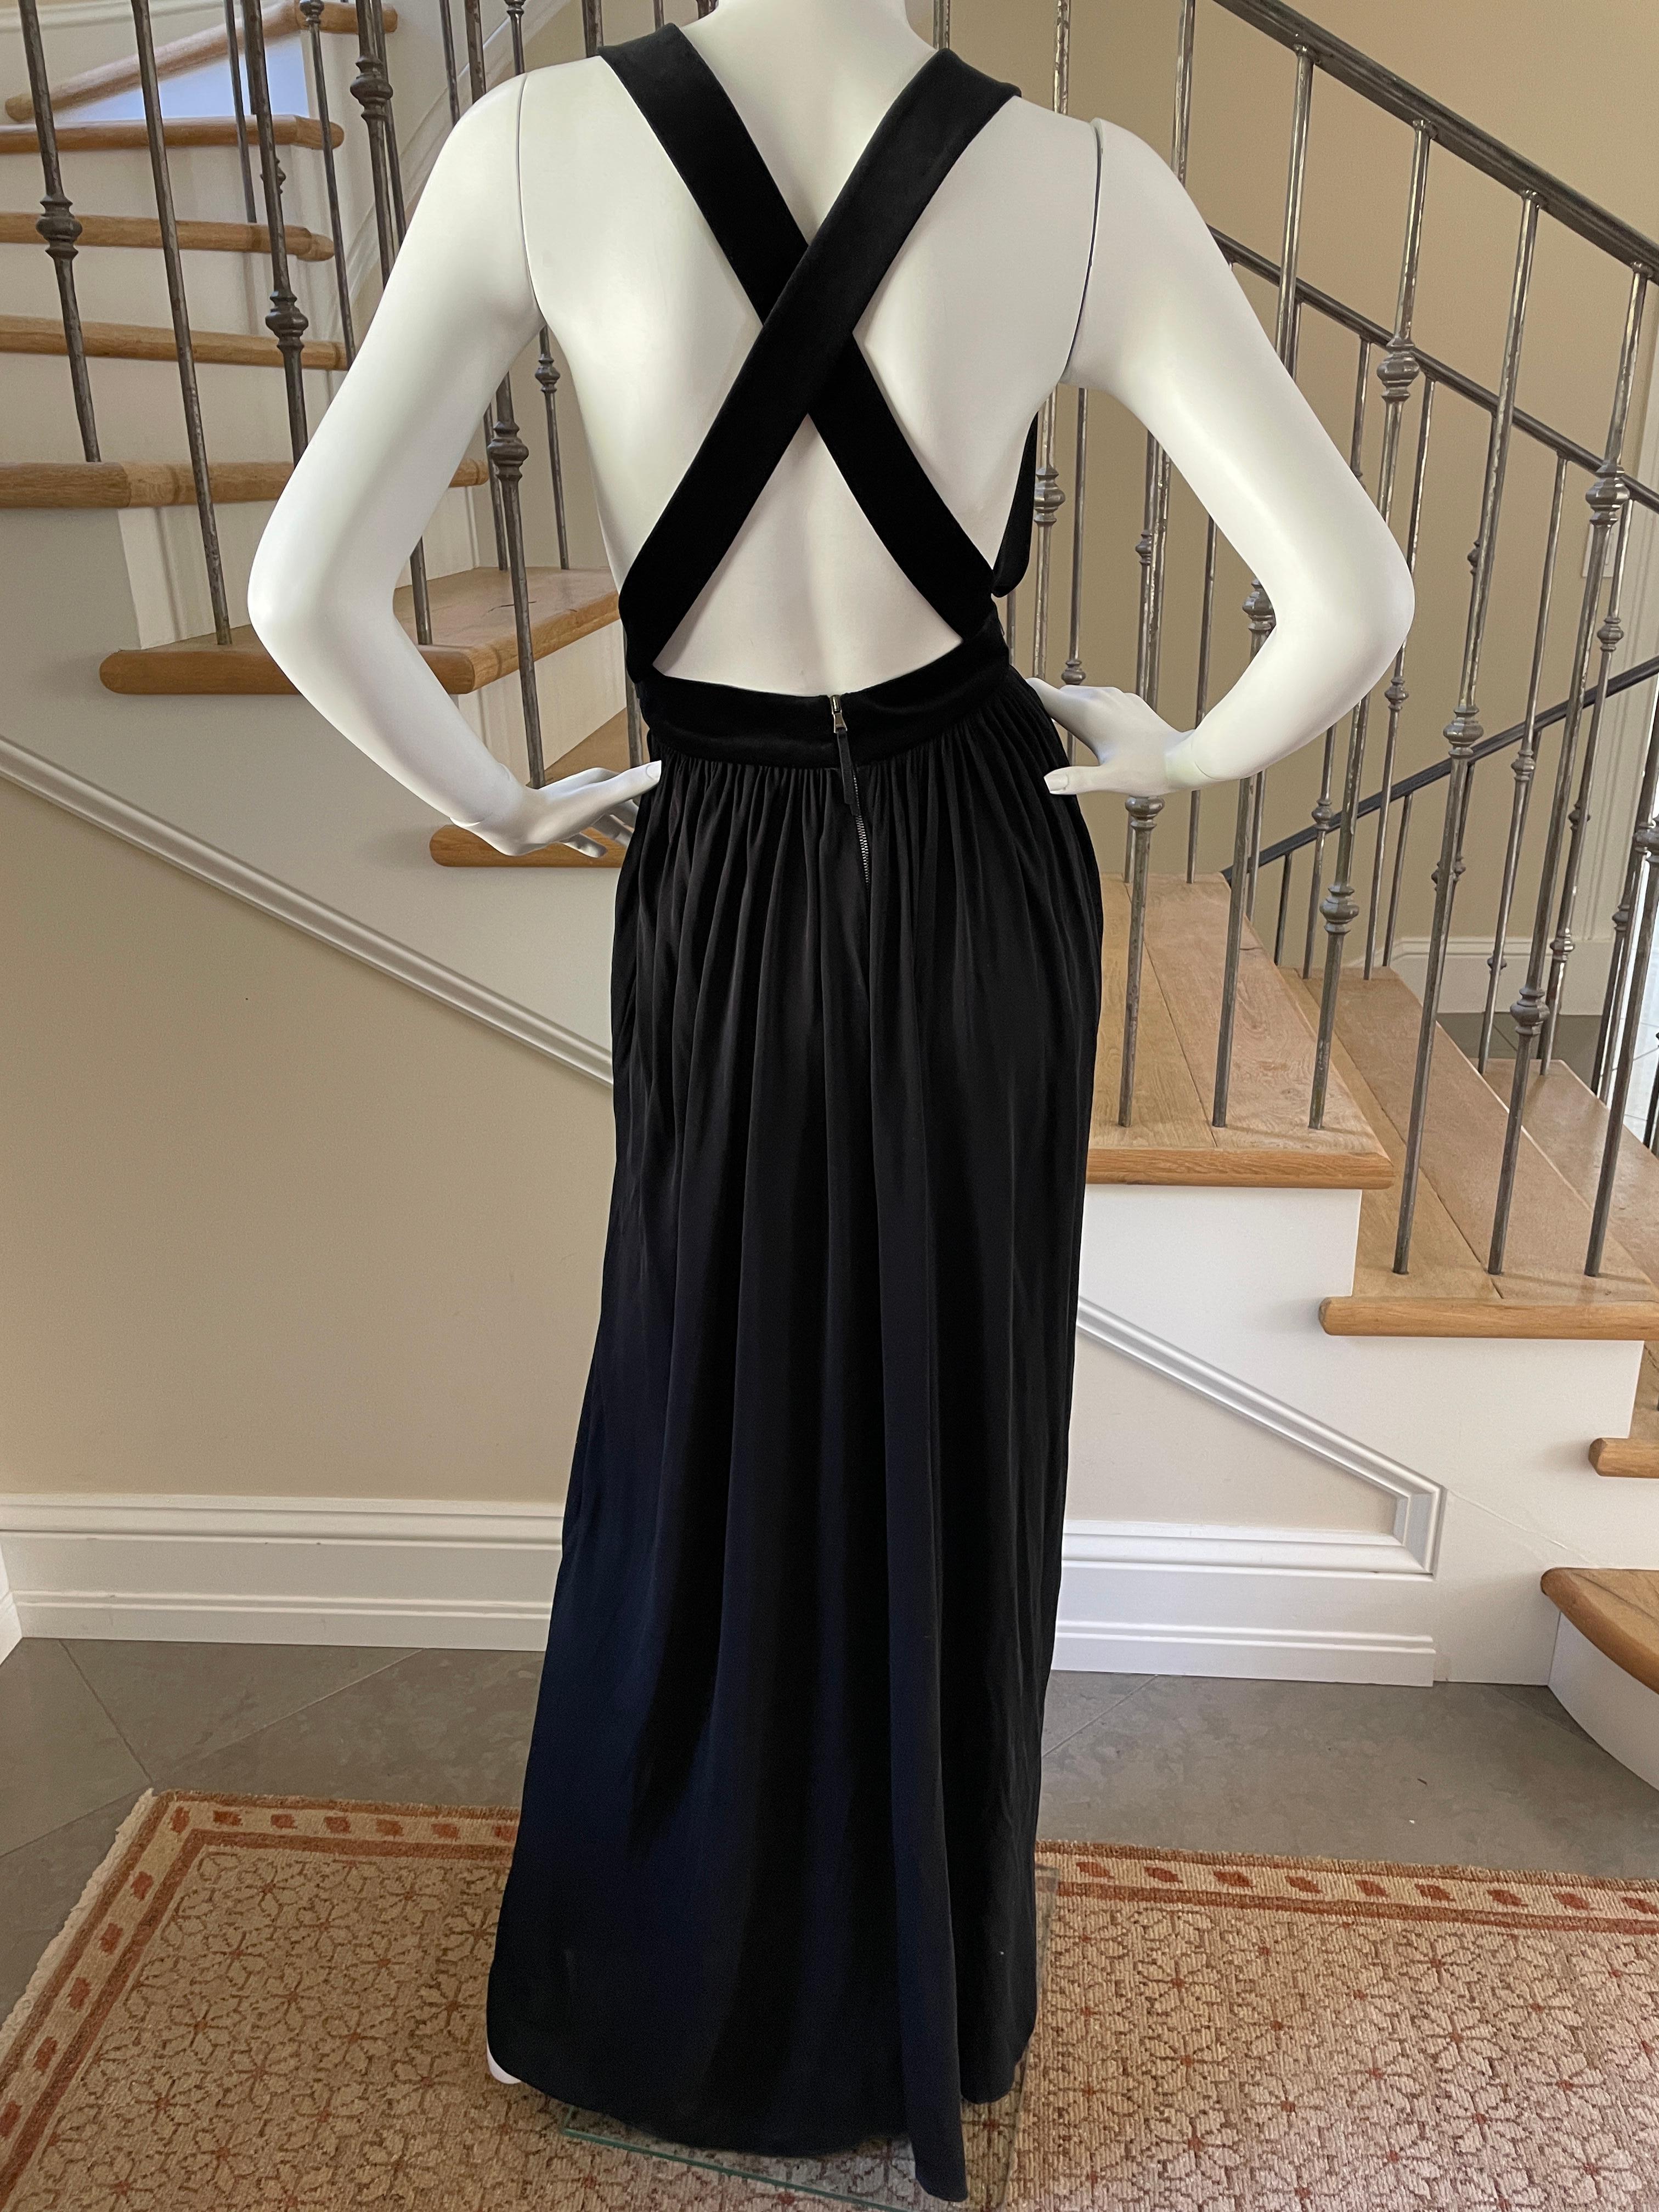 D&G by Dolce & Gabbana Vintage Plunging Black Evening Dress with Embellished Waist
Size 38
 Bust 36